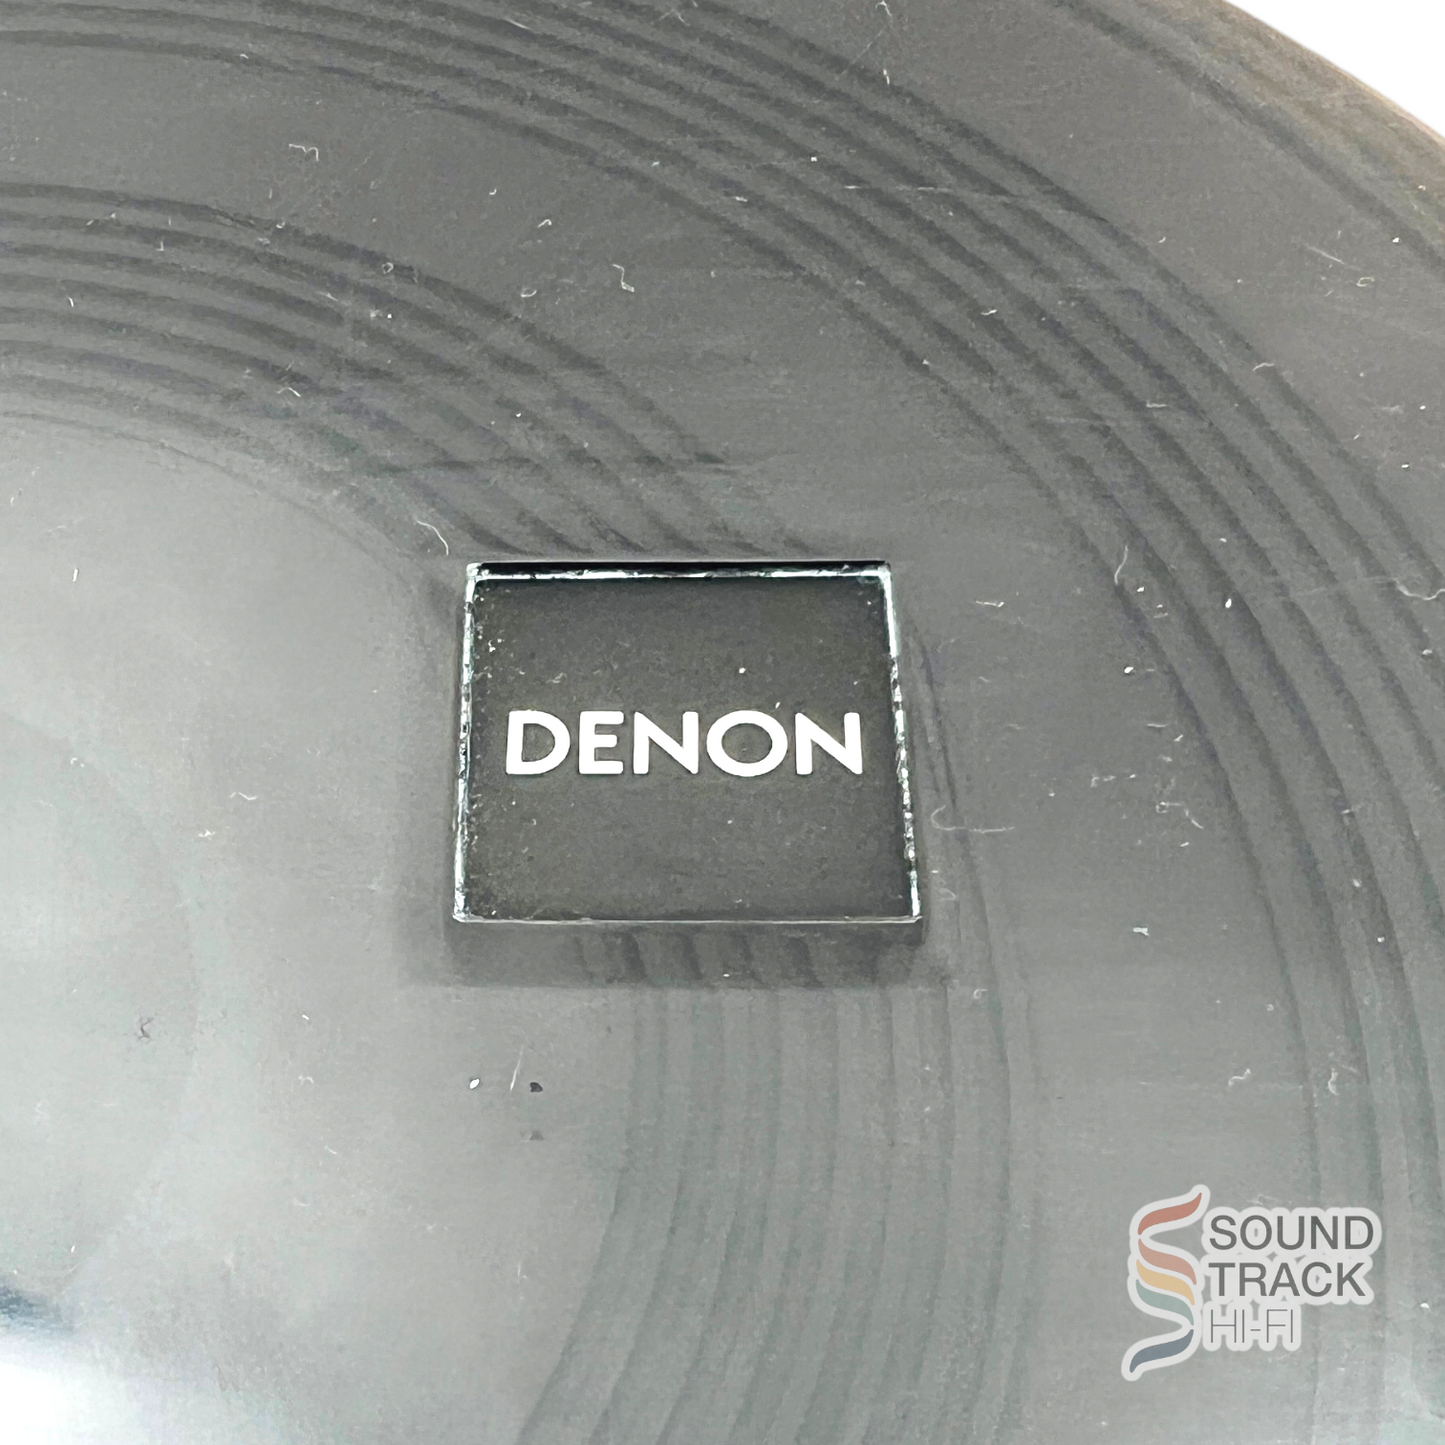 Denon DP-1000 Direct Drive Turntable